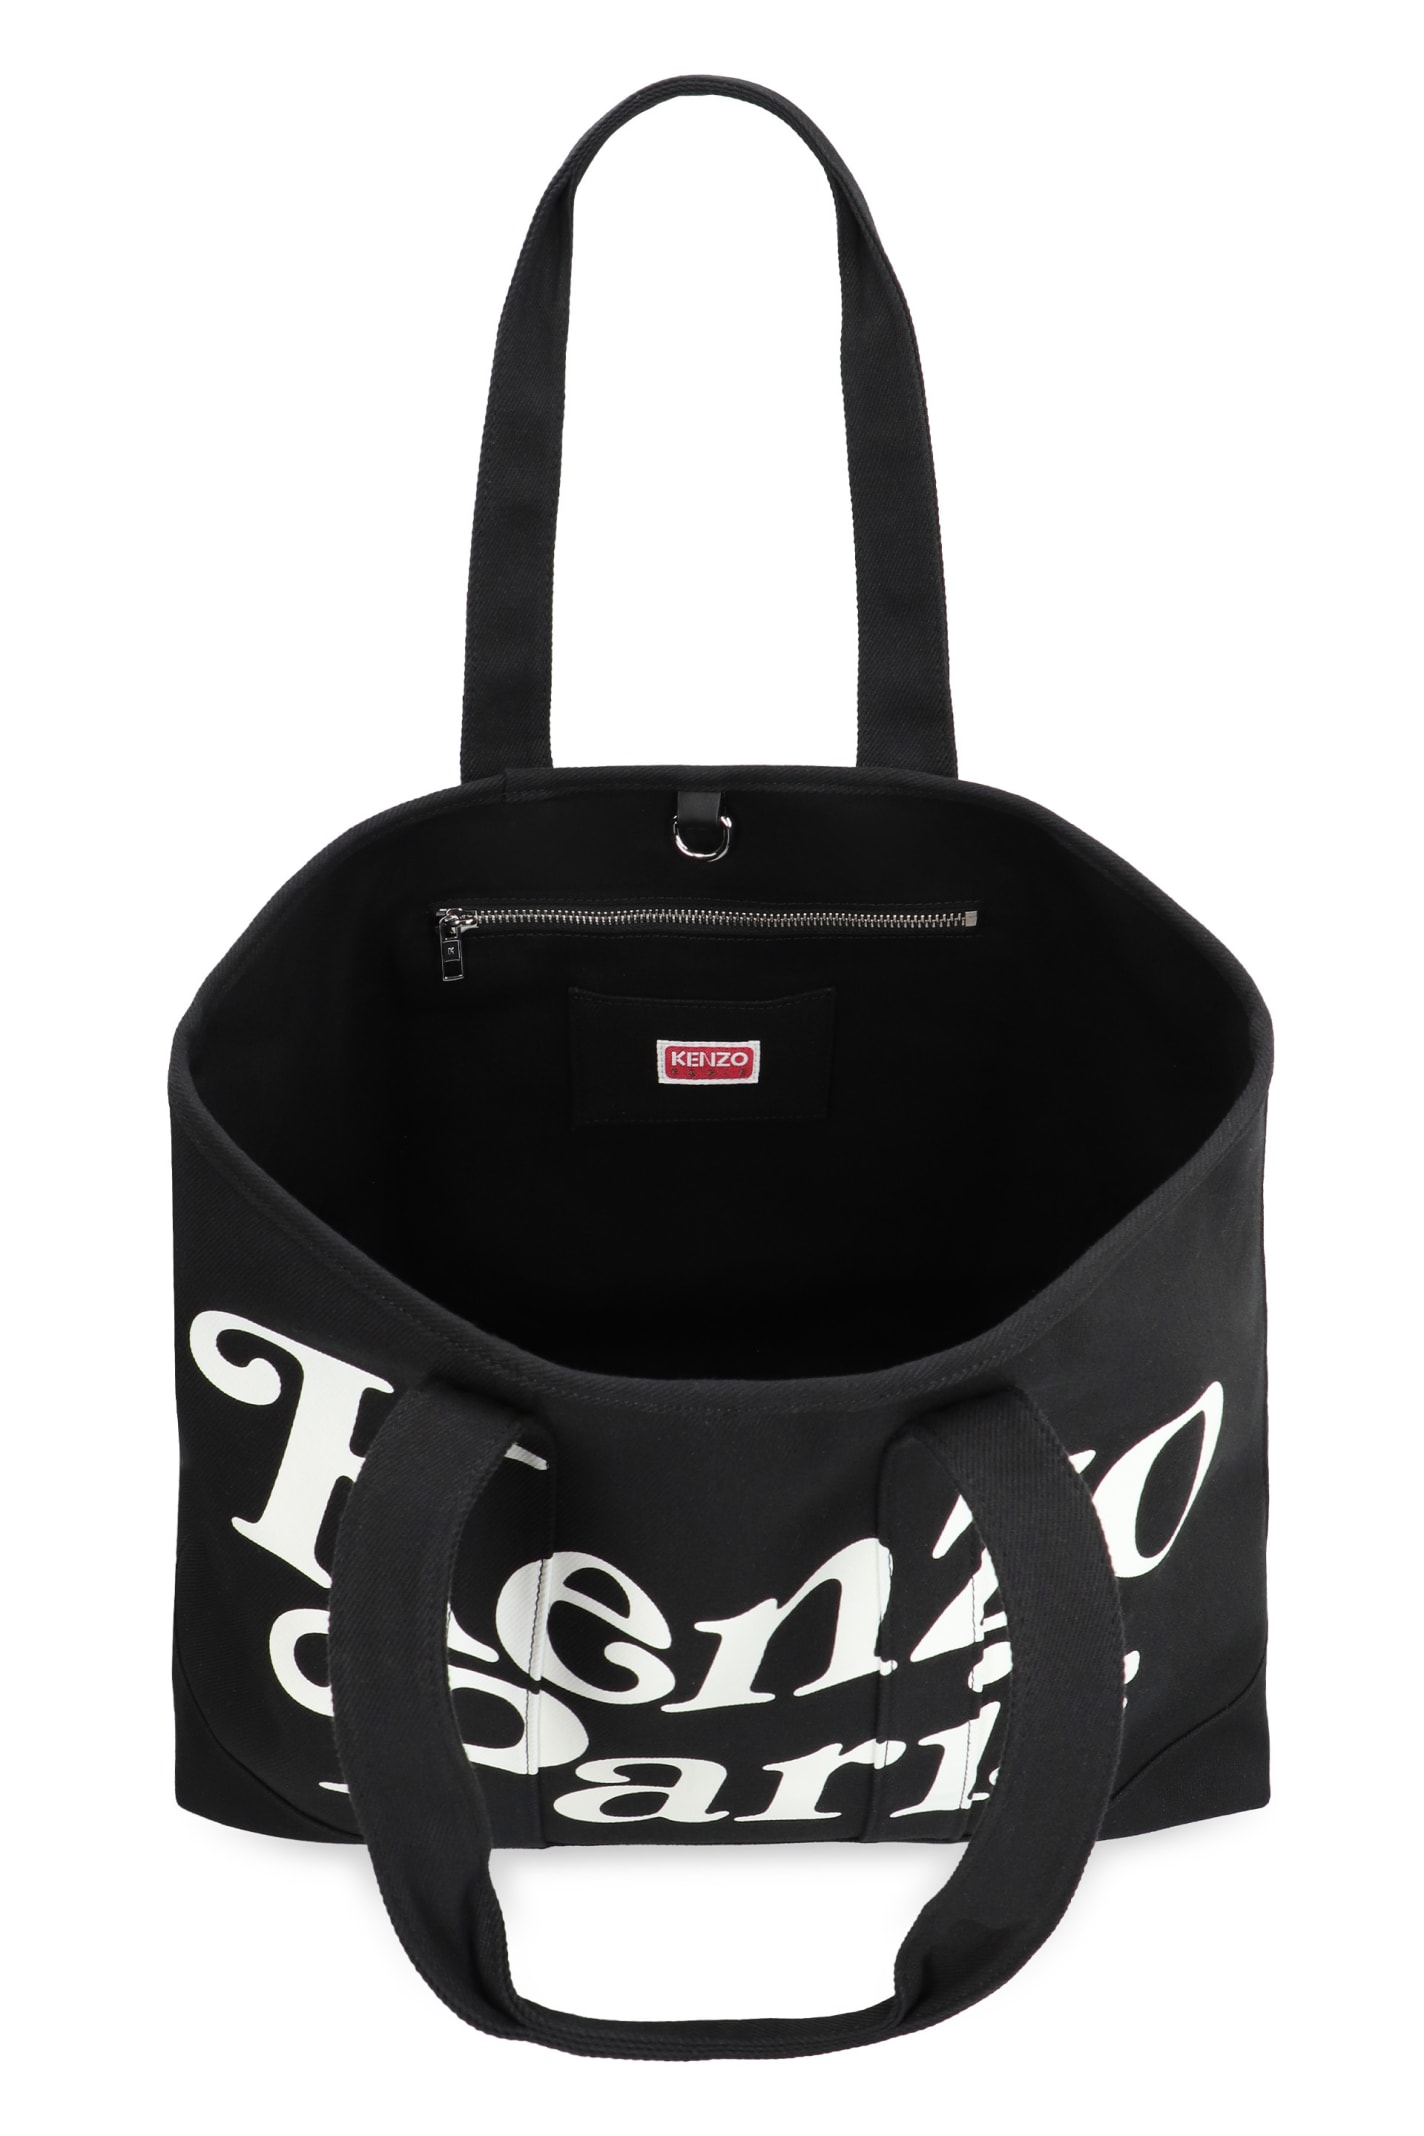 Shop Kenzo Canvas Tote Bag In Black